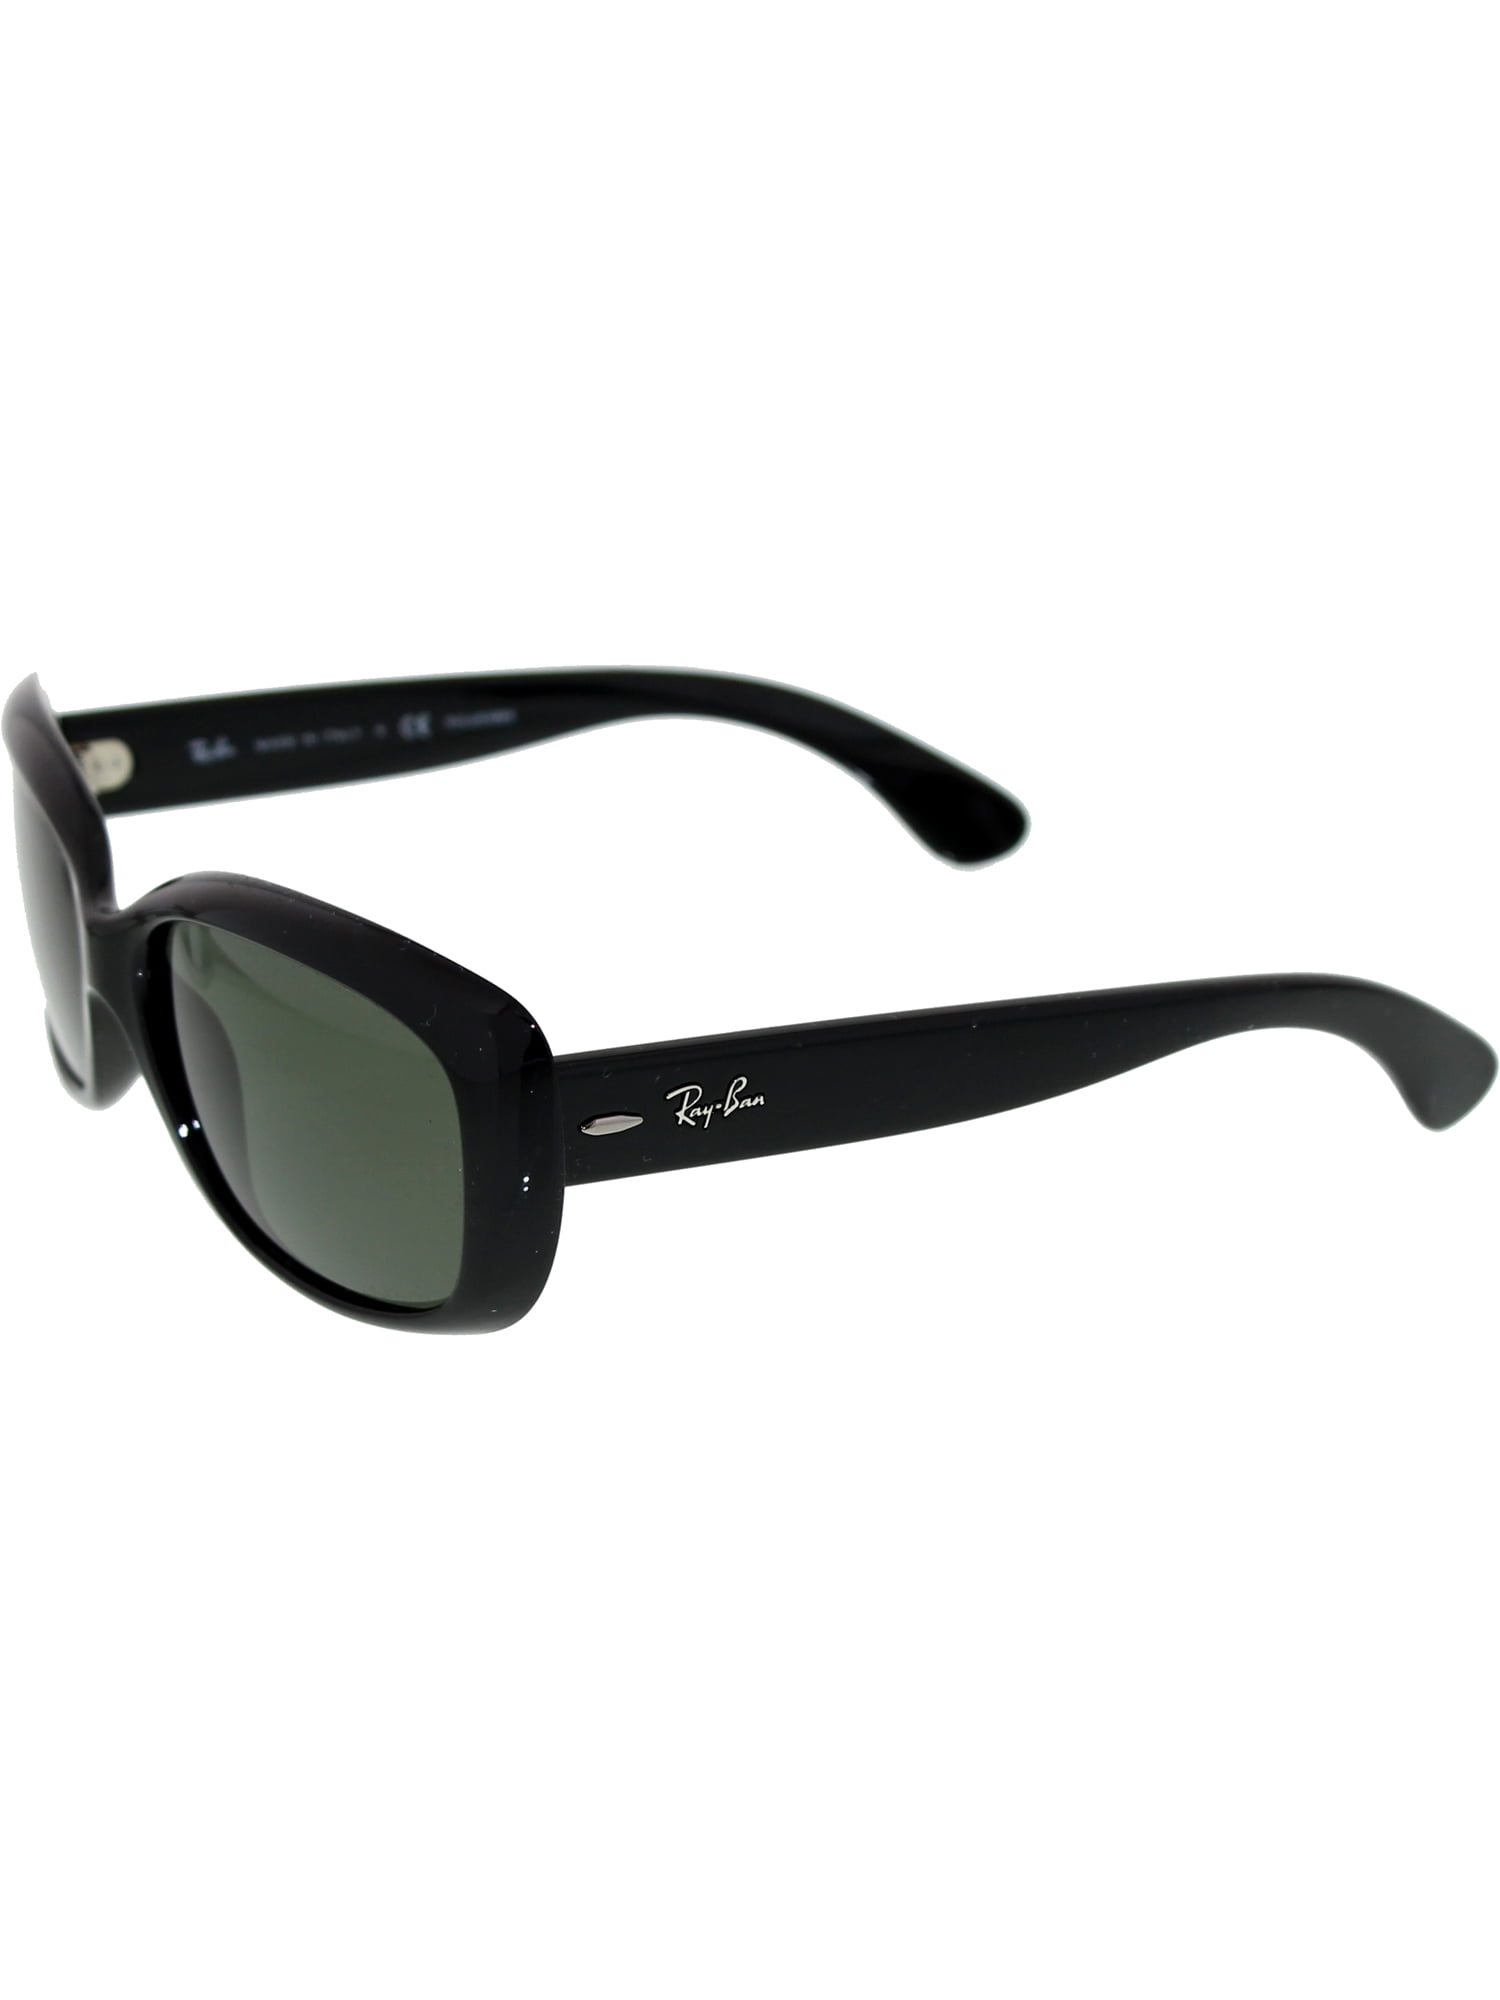 Ray-Ban Women's Polarized 195 RB4101-601/58-58 Black Cat Eye Sunglasses -  